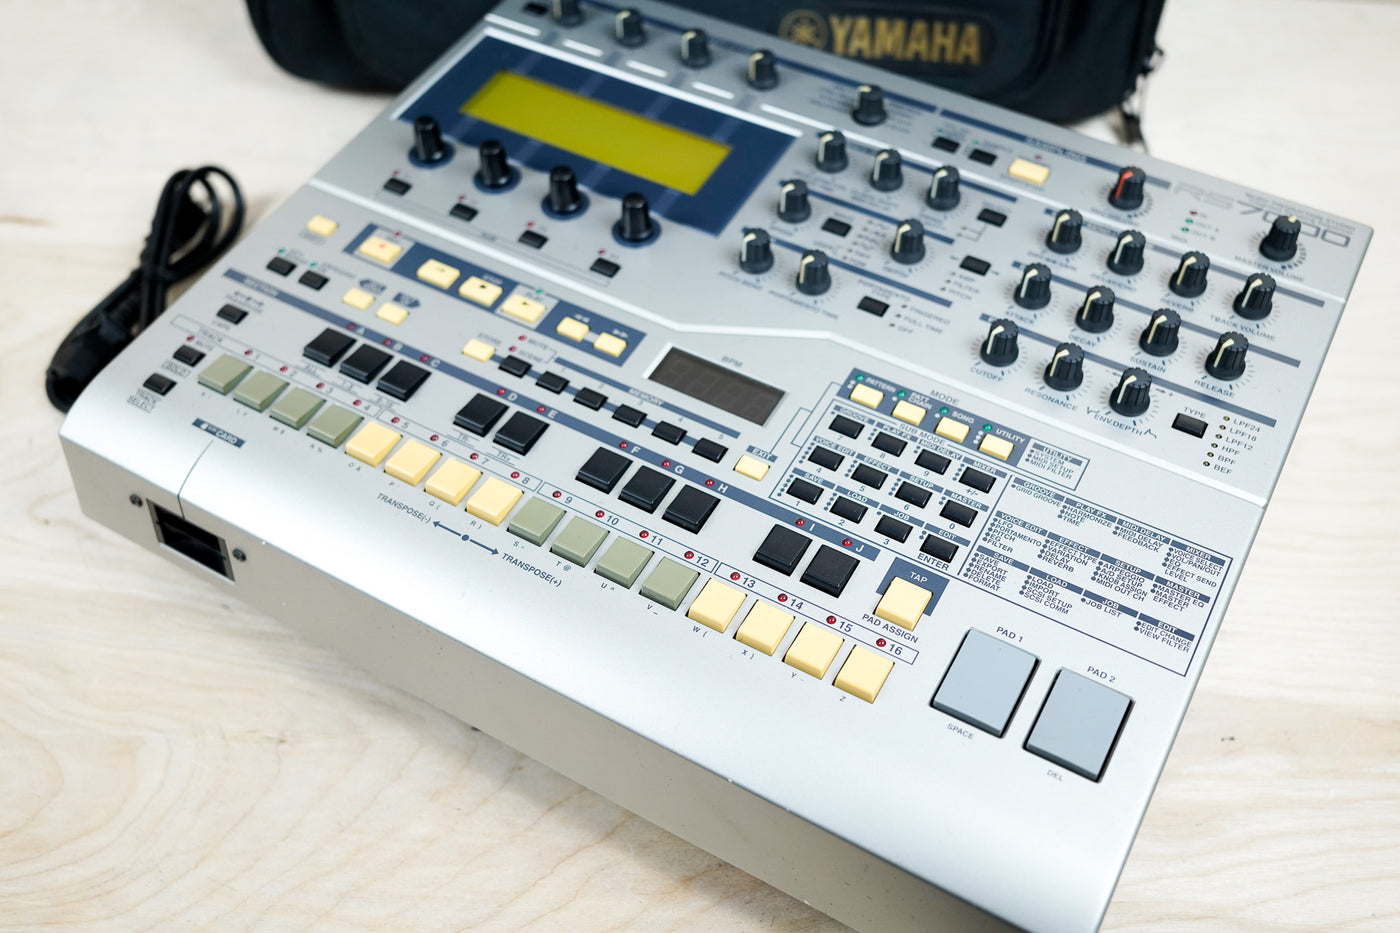 Yamaha RS-7000 Music Production Studio 100V Made in Japan MIJ